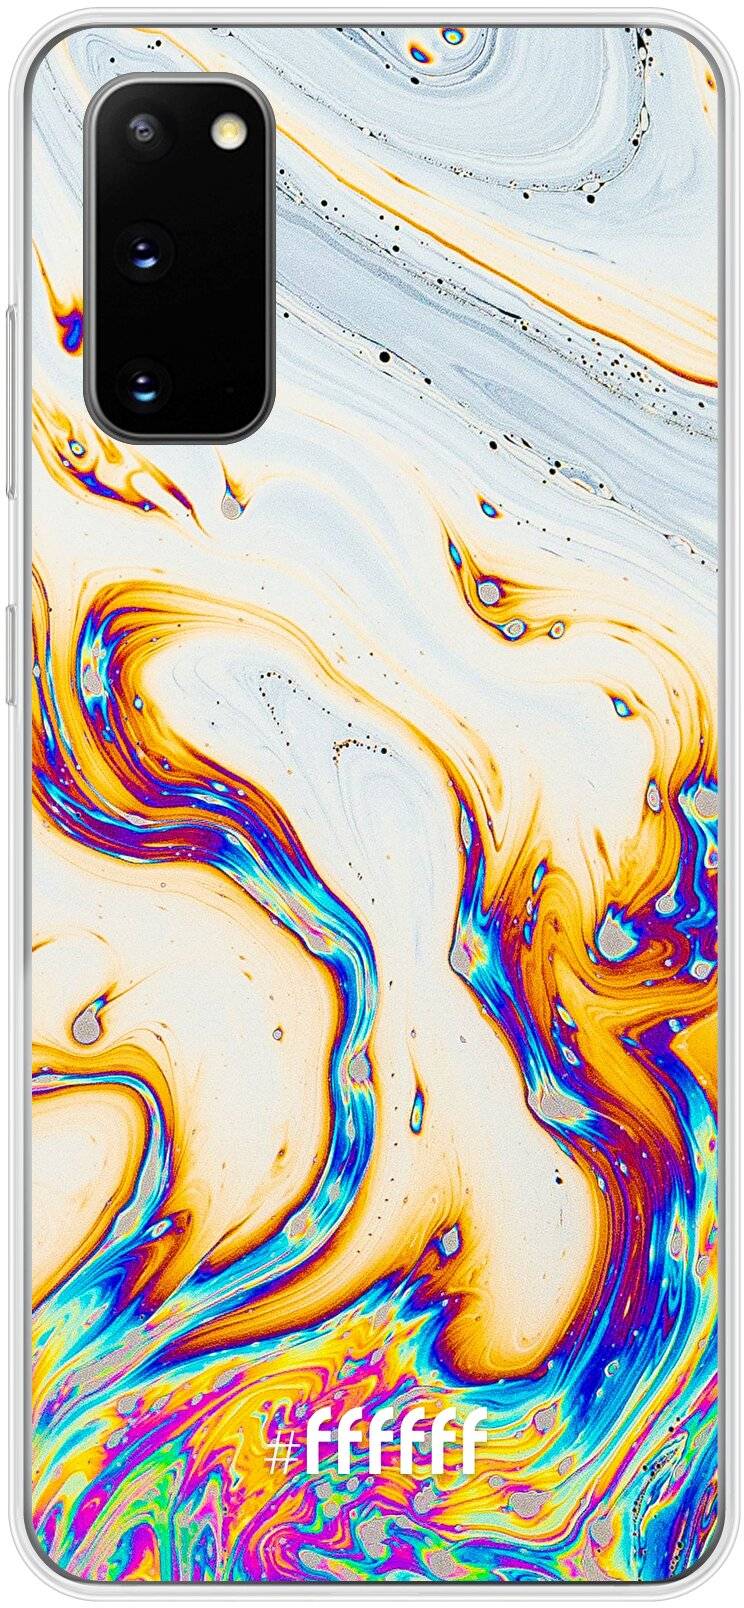 Bubble Texture Galaxy S20